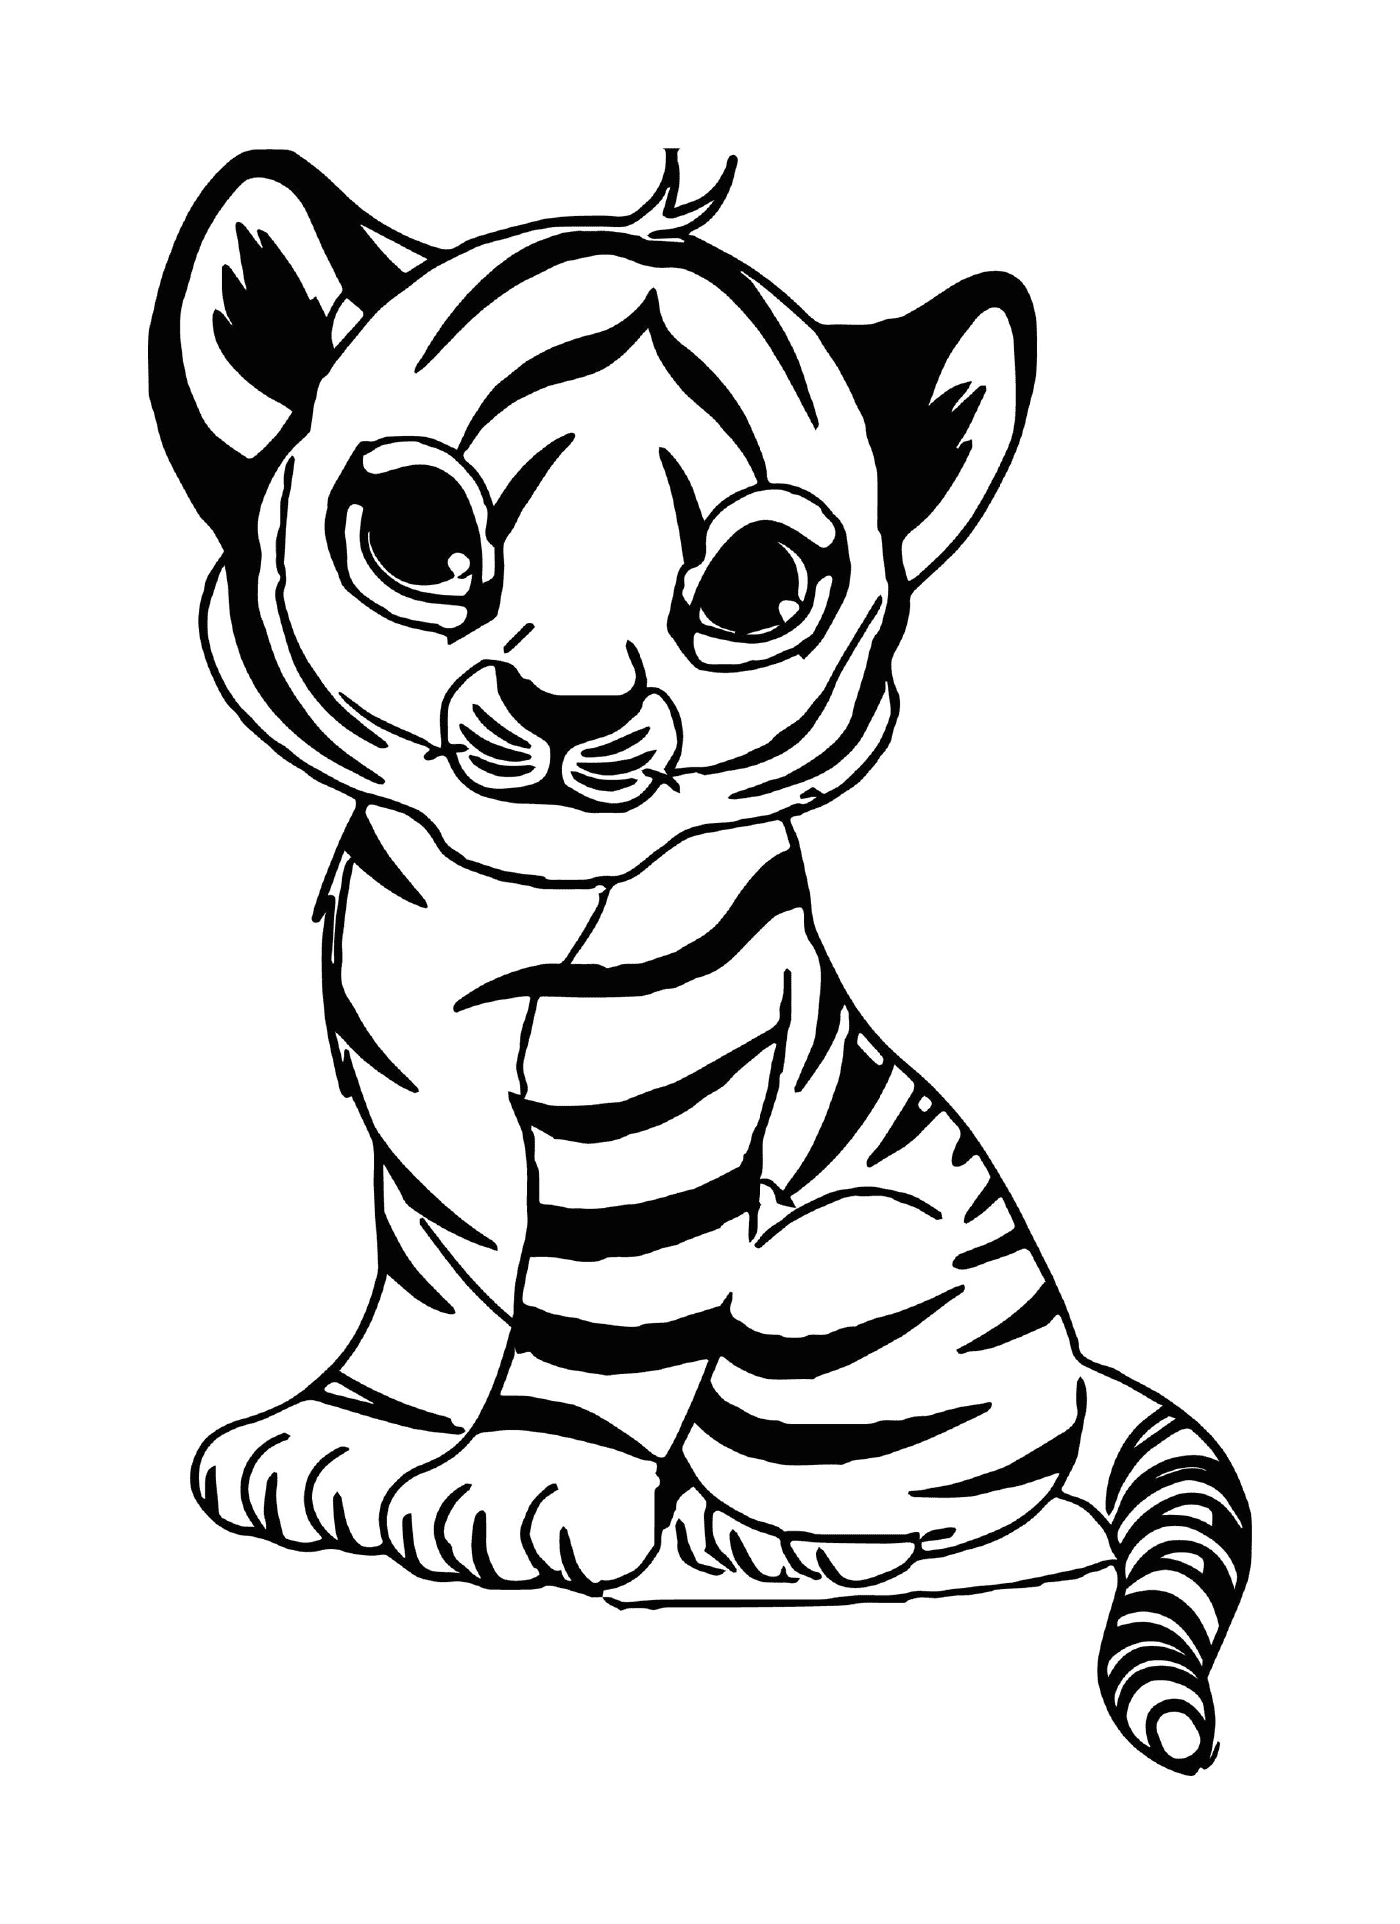 coloriage un bebe tigre felin avec fourrure jaune rayee de noir